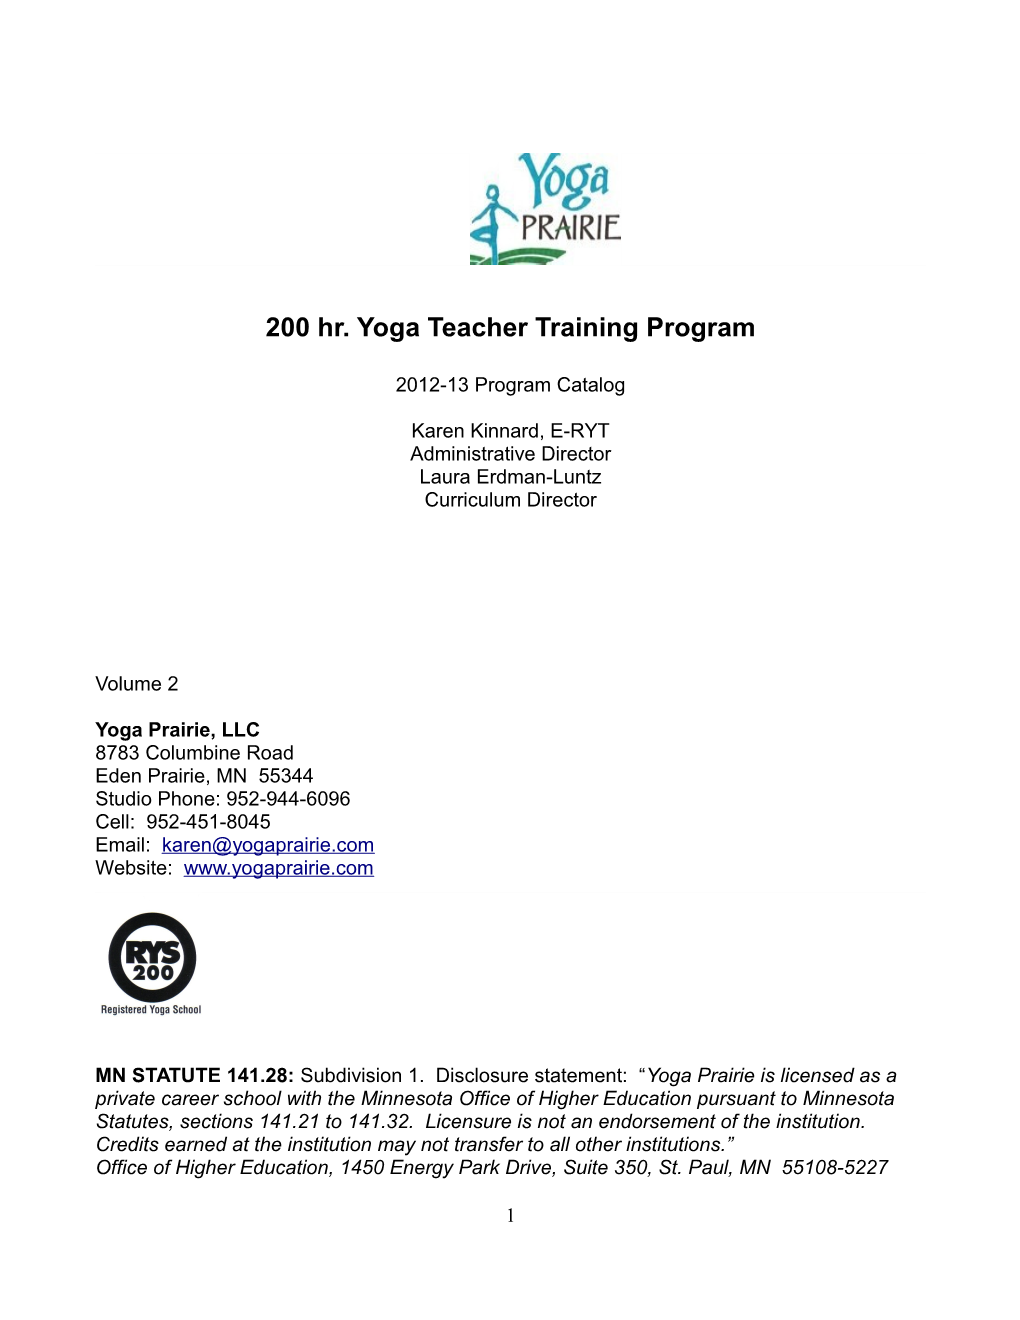 200 Hr. Yoga Teacher Training Program